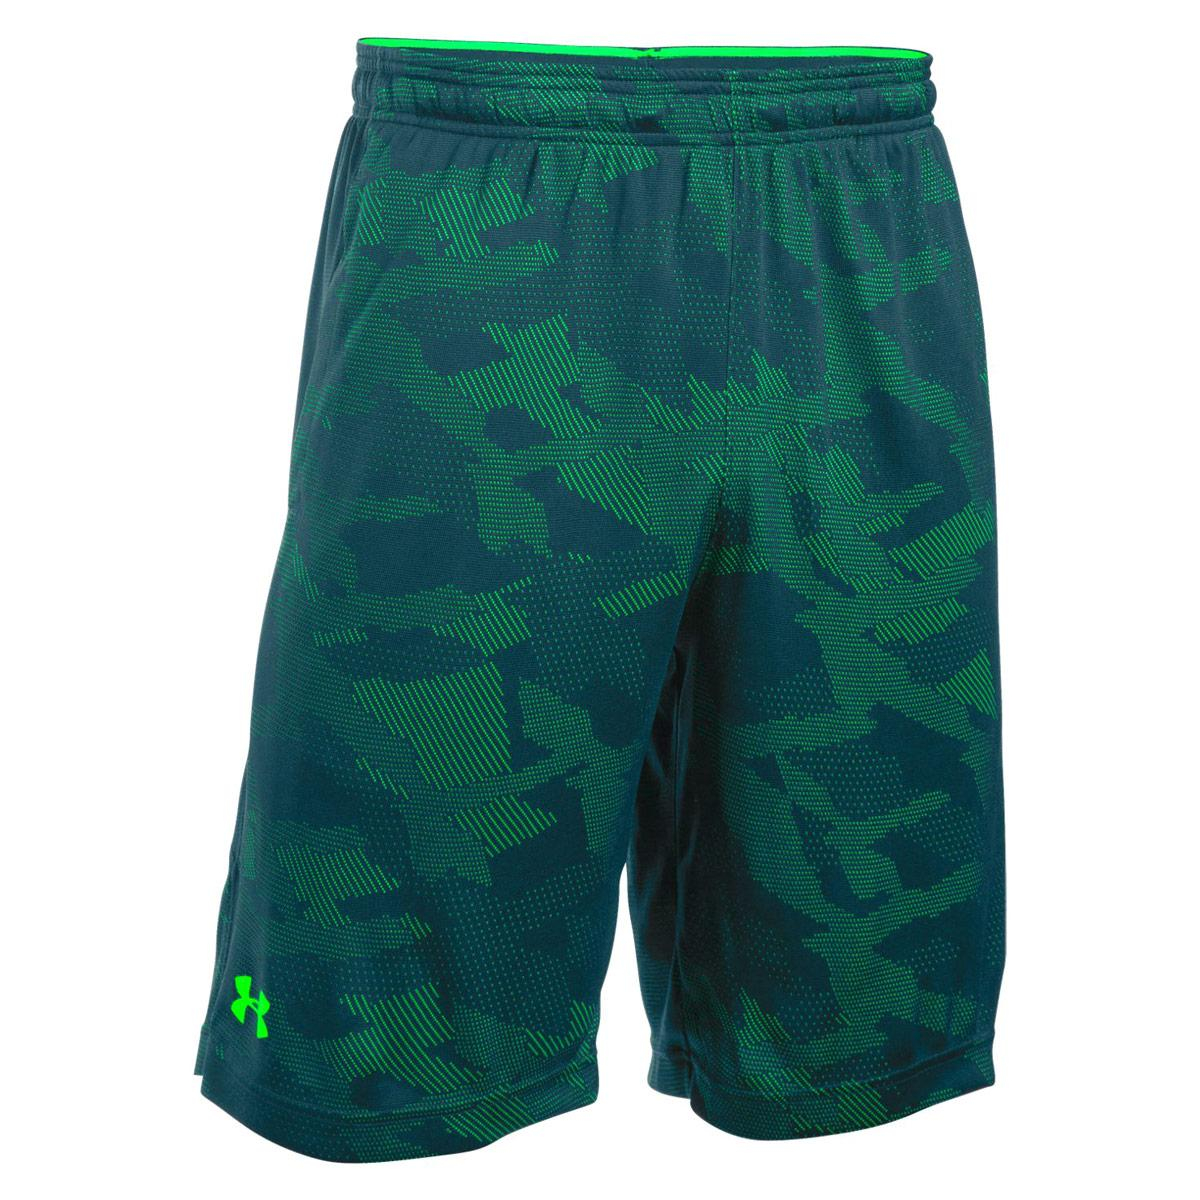 Men's Under Armour Jacquard Green Shorts